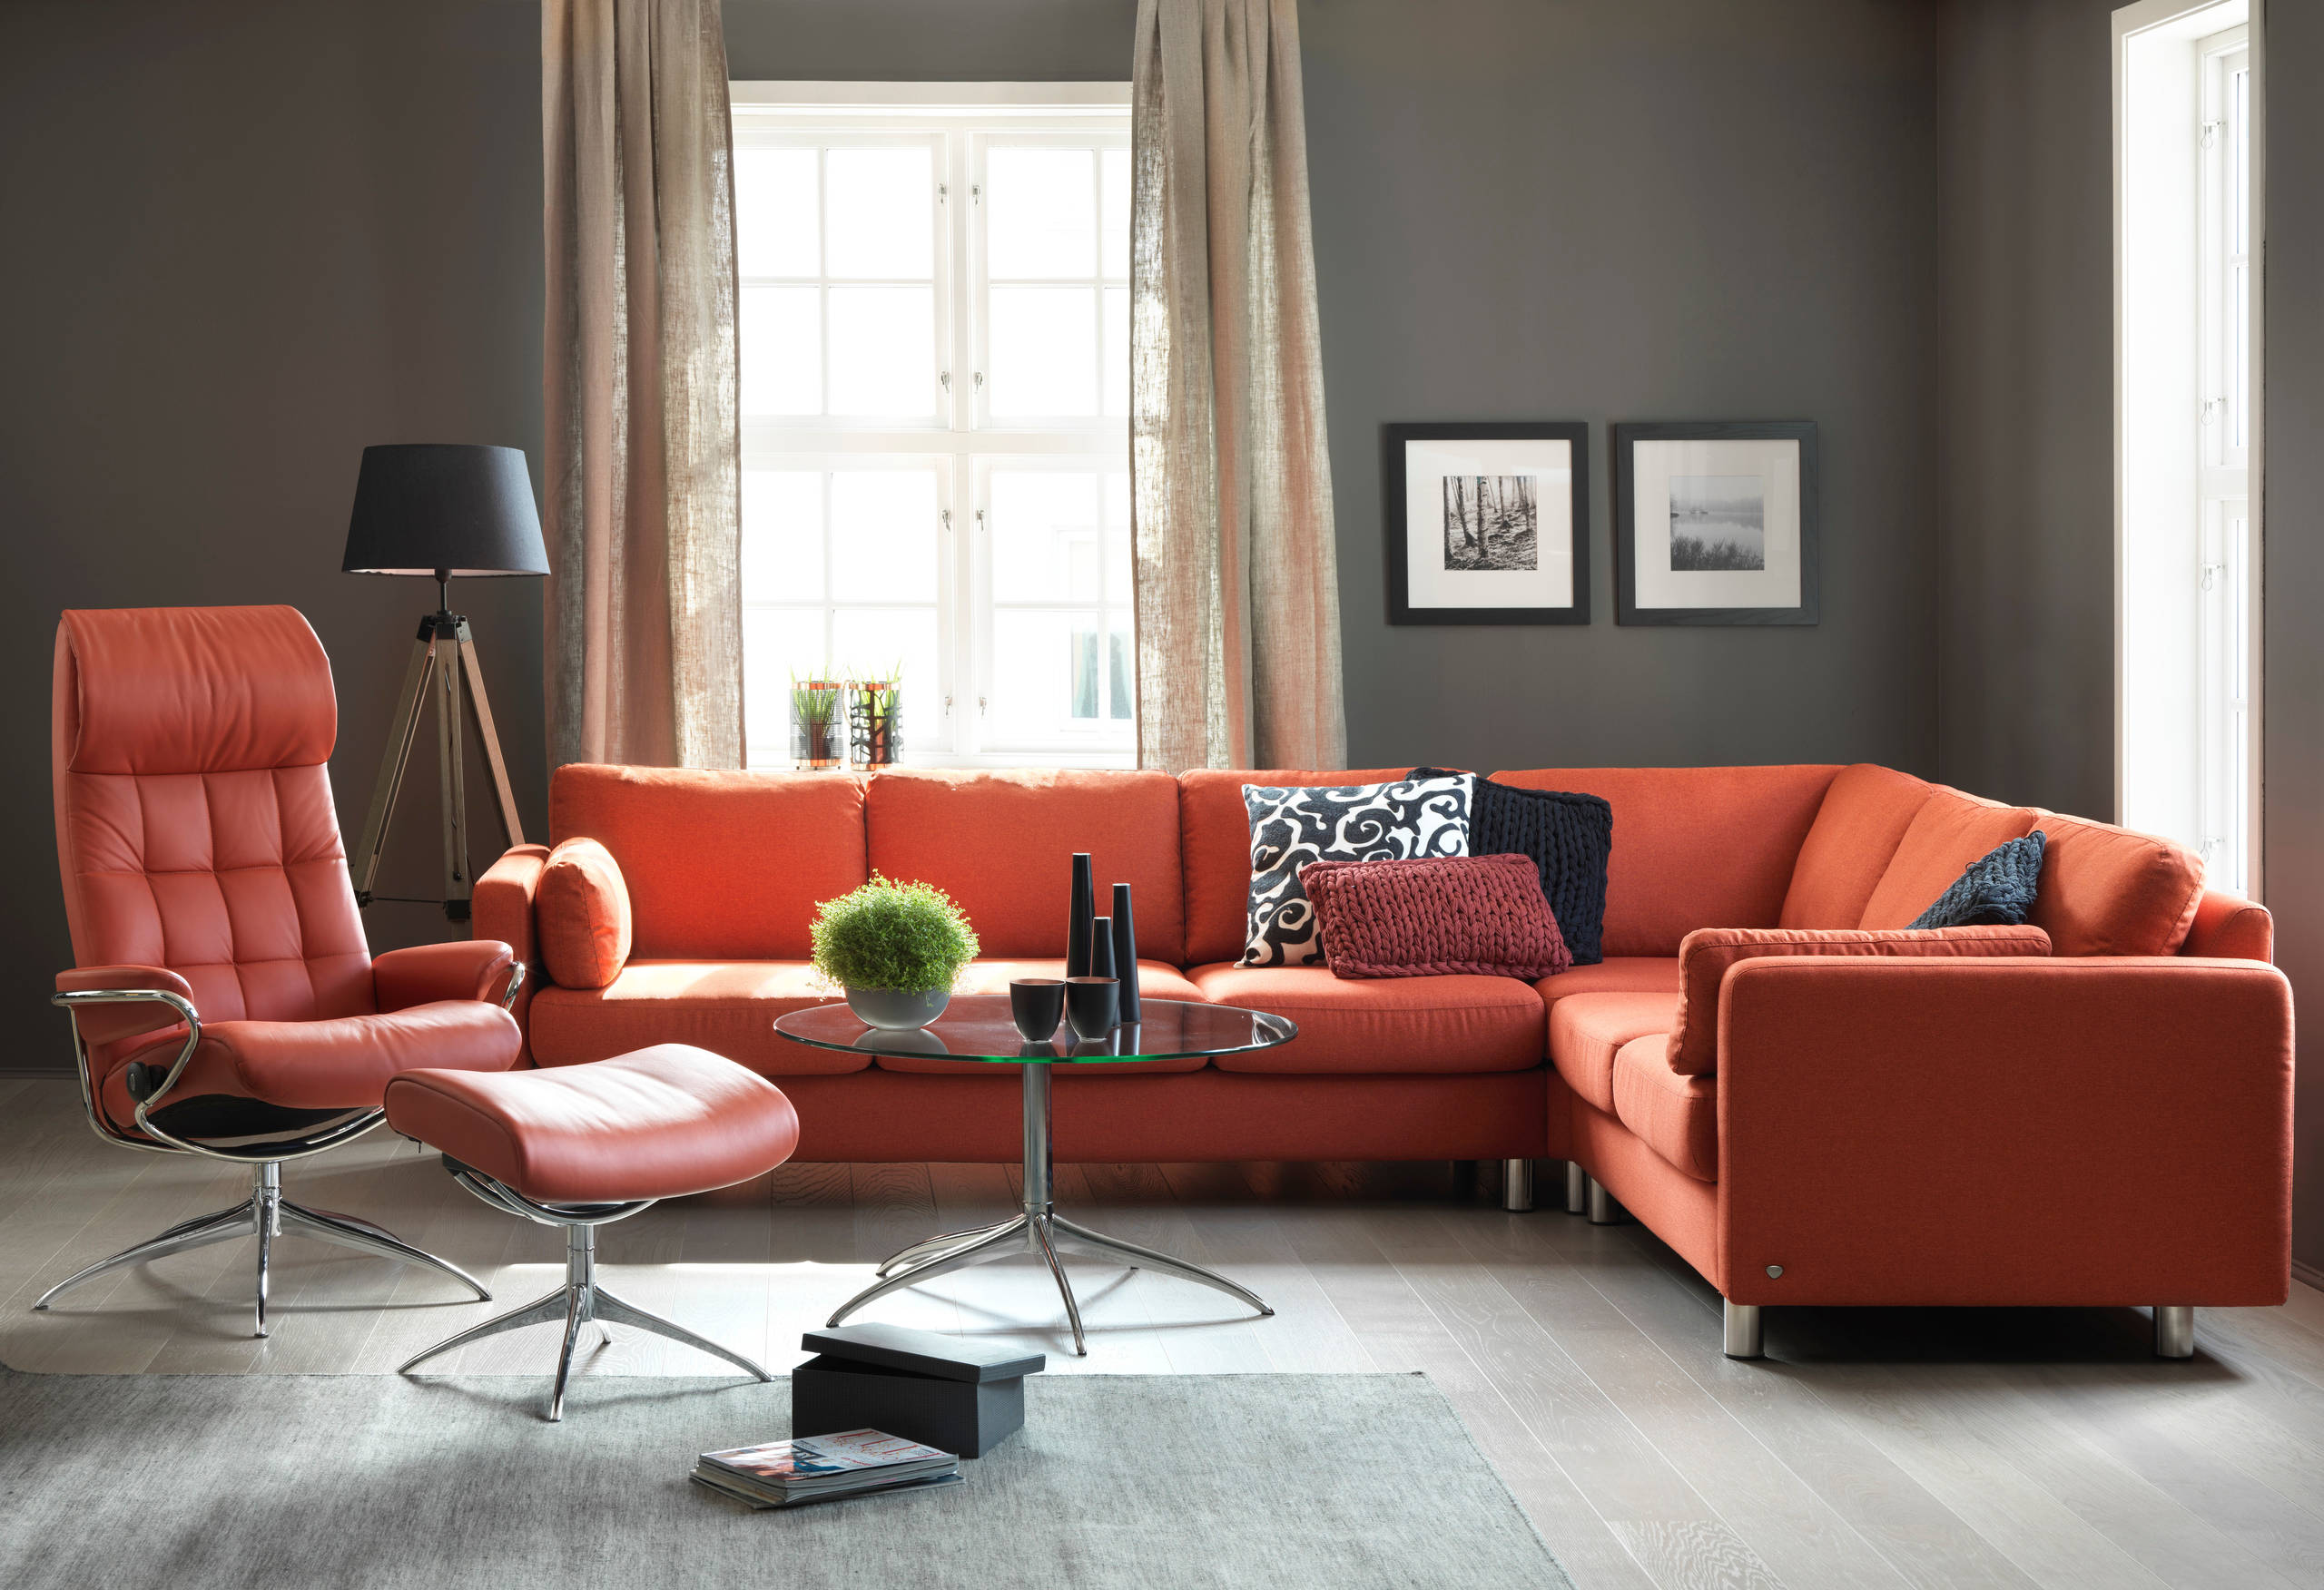 Ensemble Canapé et Fauteuil Orange et Rouge - Stressless - Contemporary -  Living Room - Grenoble - by Stressless France | Houzz